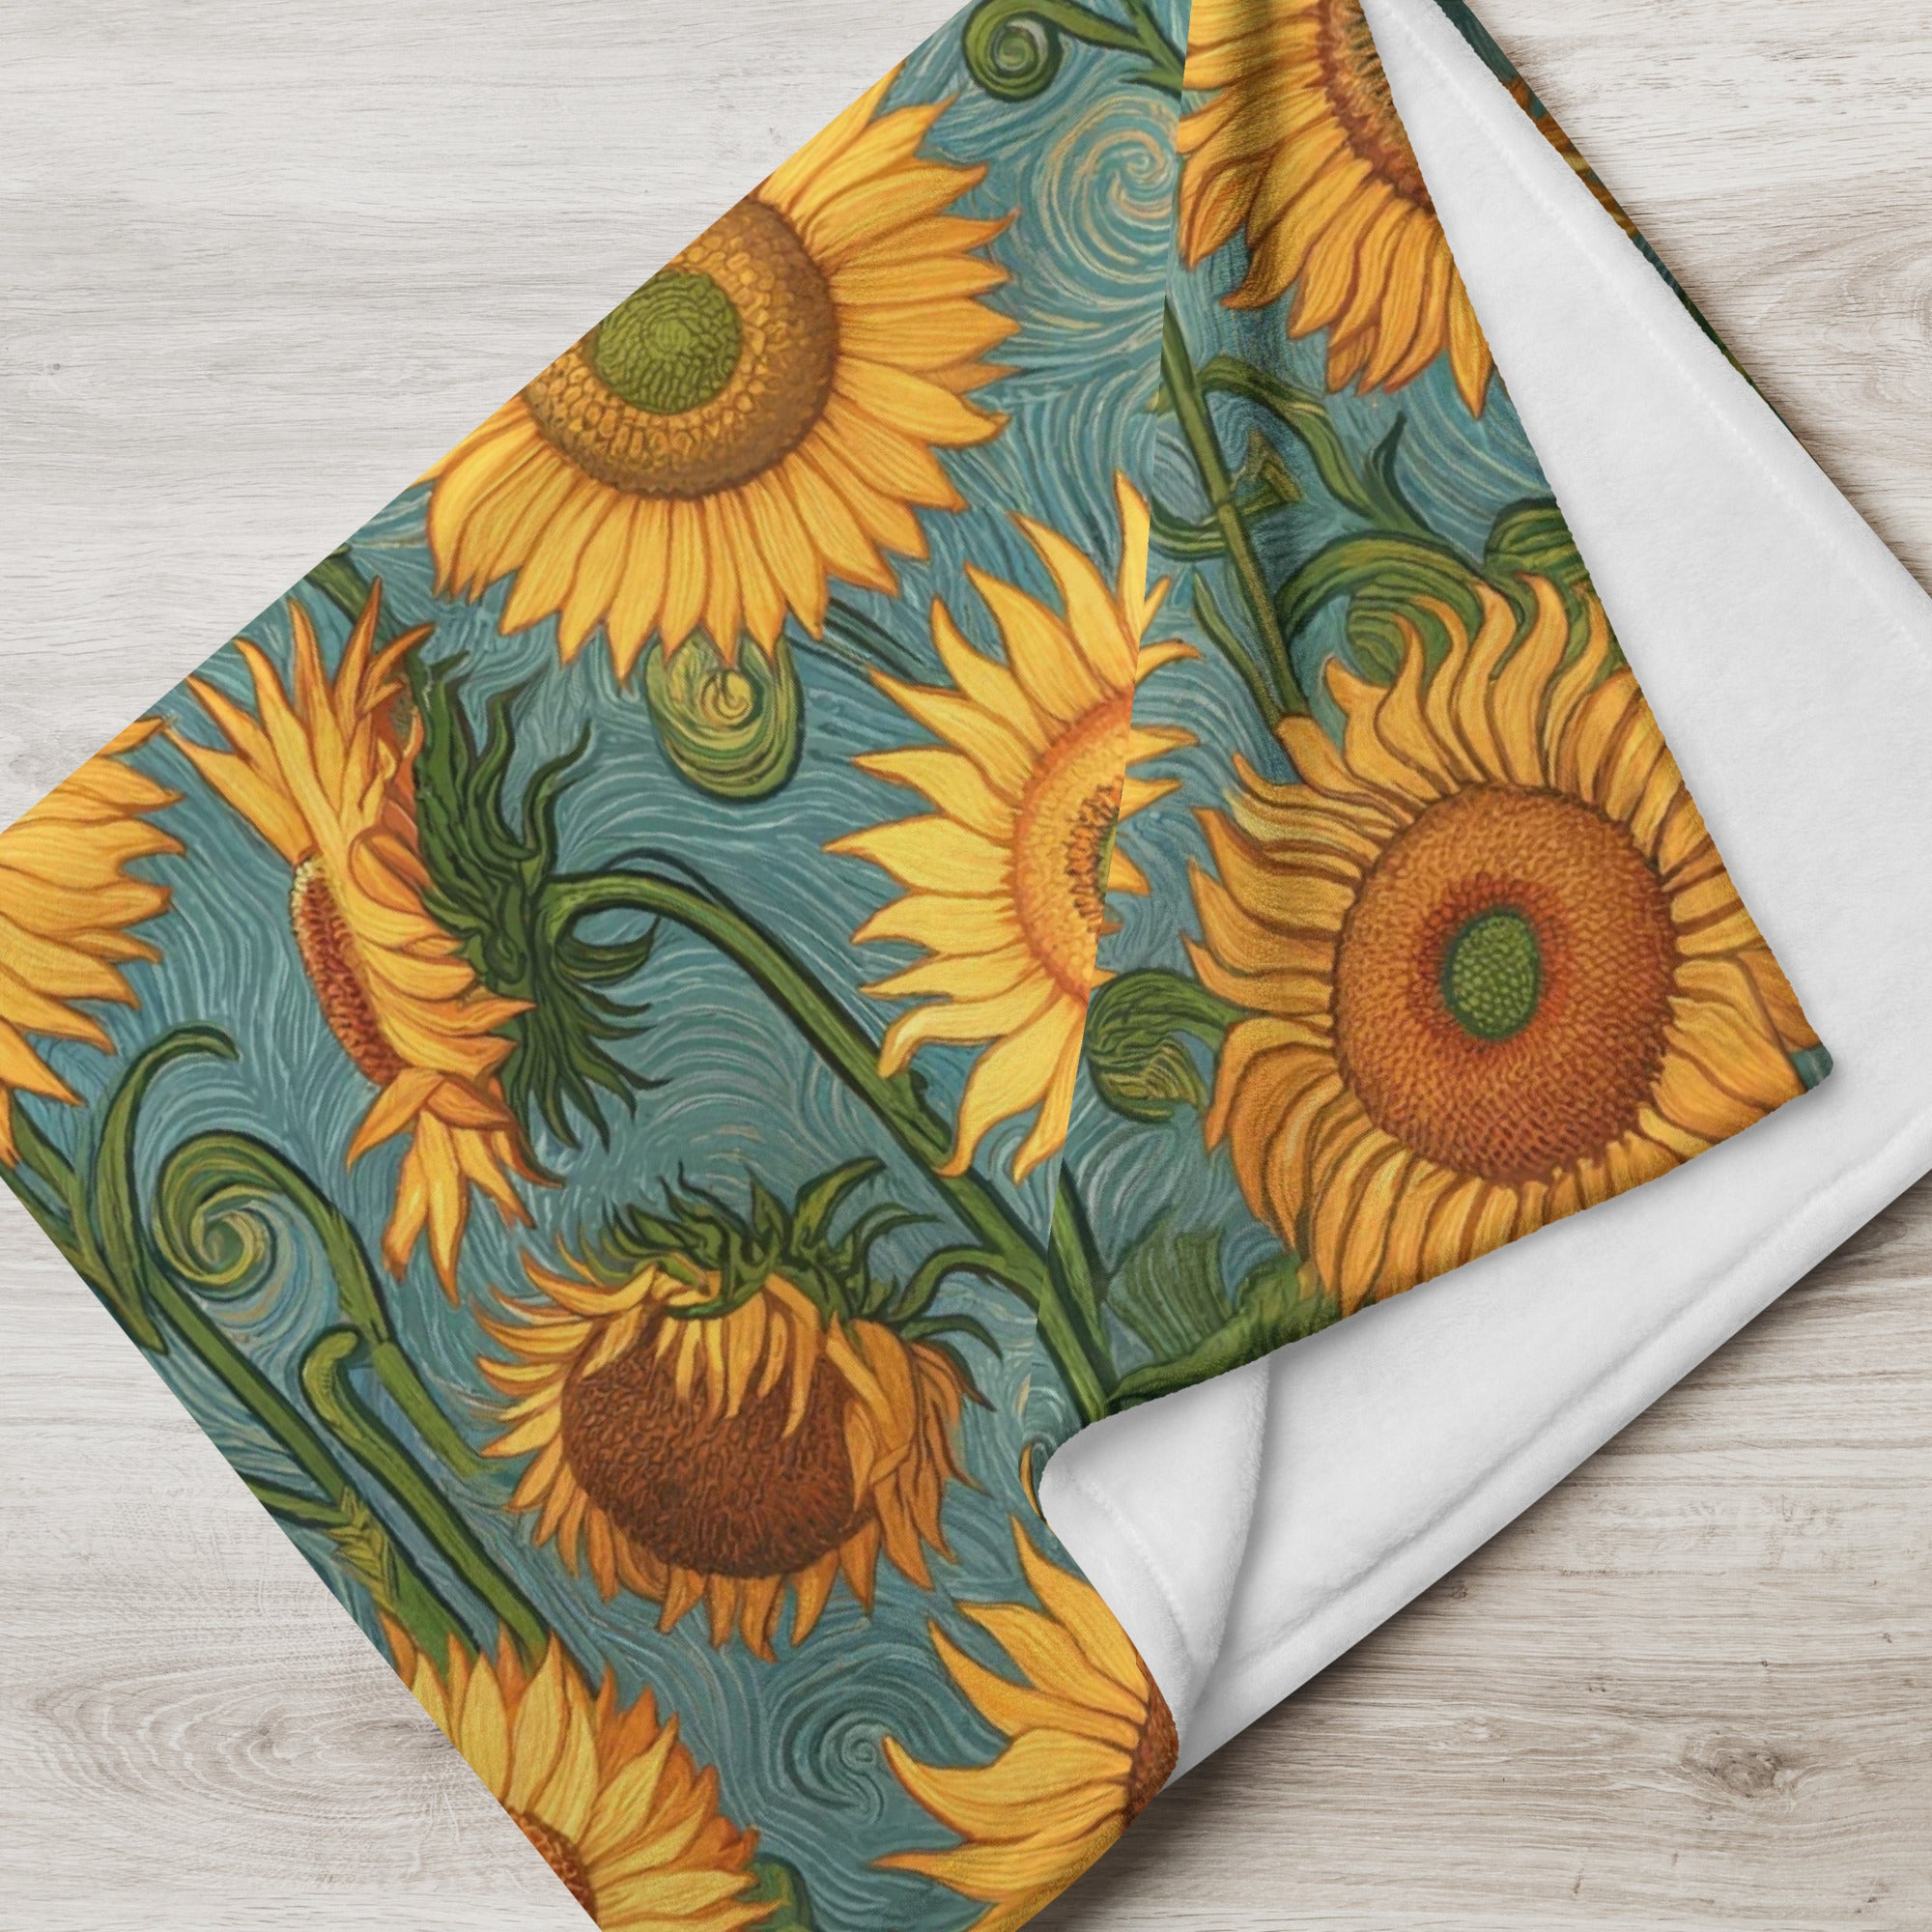 Vincent van Gogh 'Sunflowers' Famous Painting Throw Blanket | Premium Art Throw